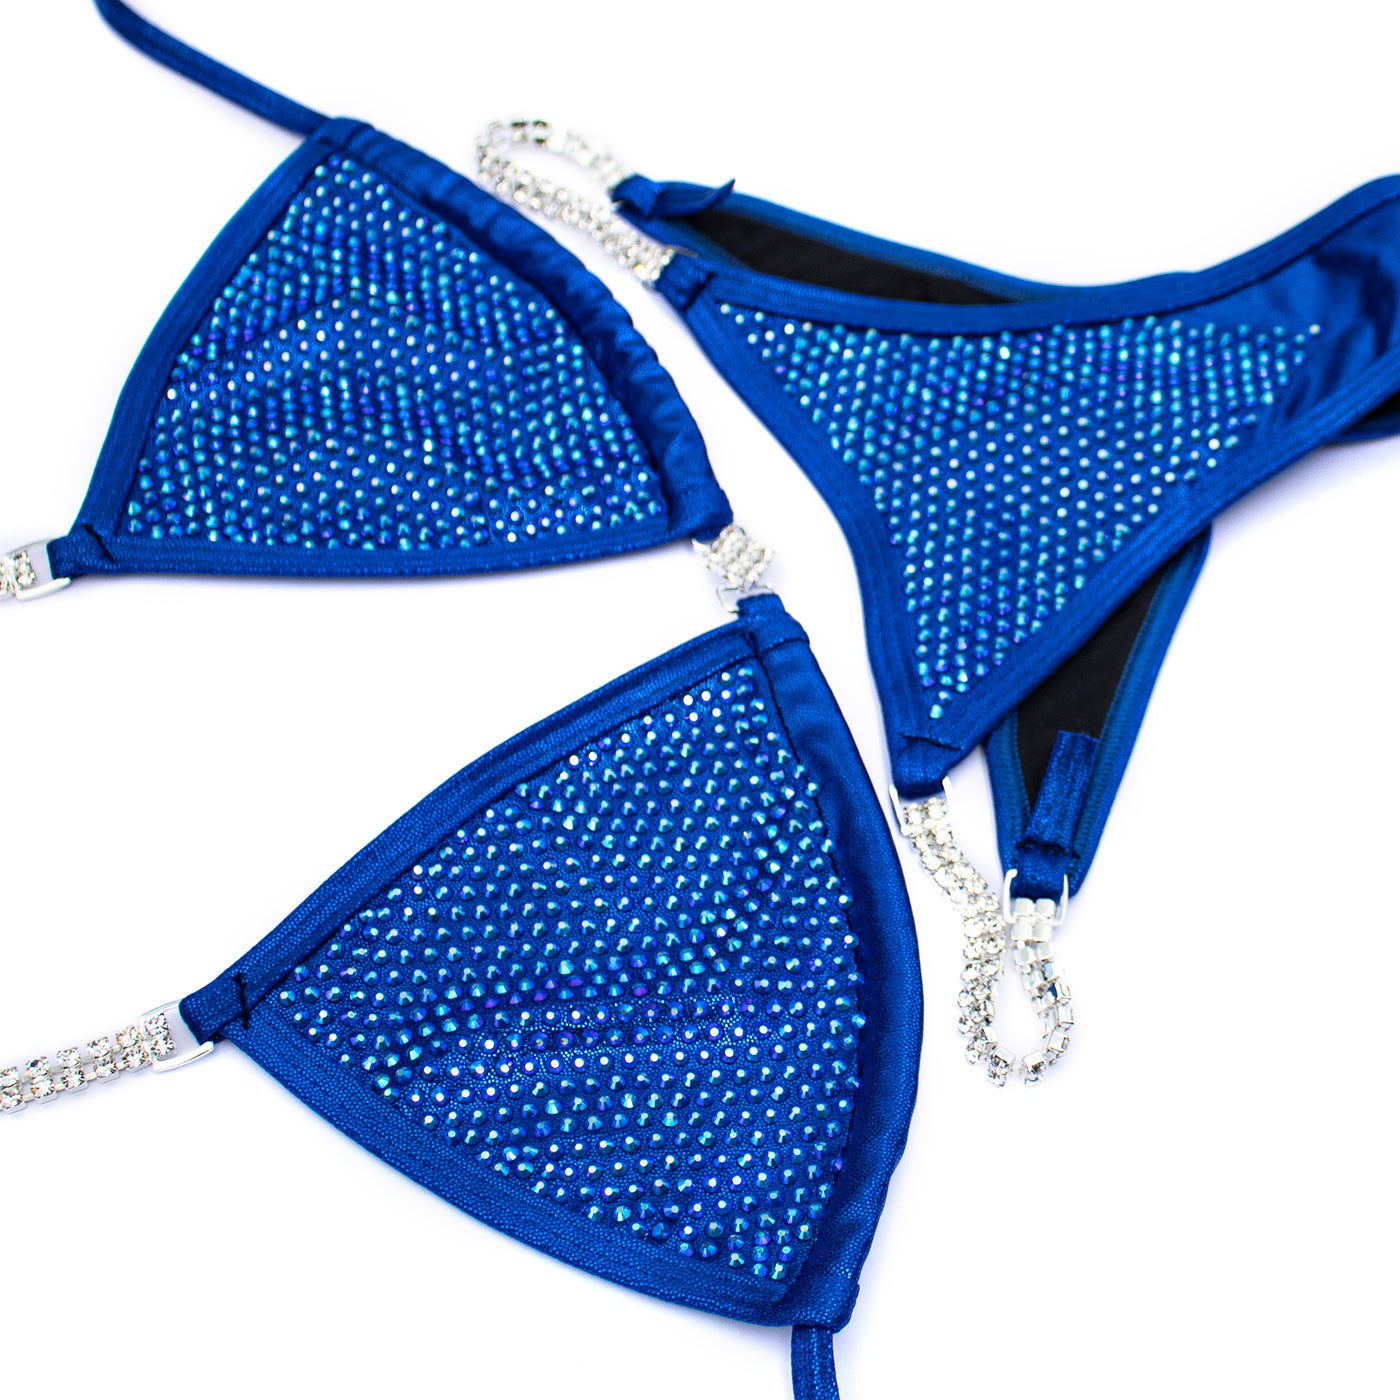 Sapphire AB Competition Bikini S/S | Pre-Made Suits | OMG Bikinis